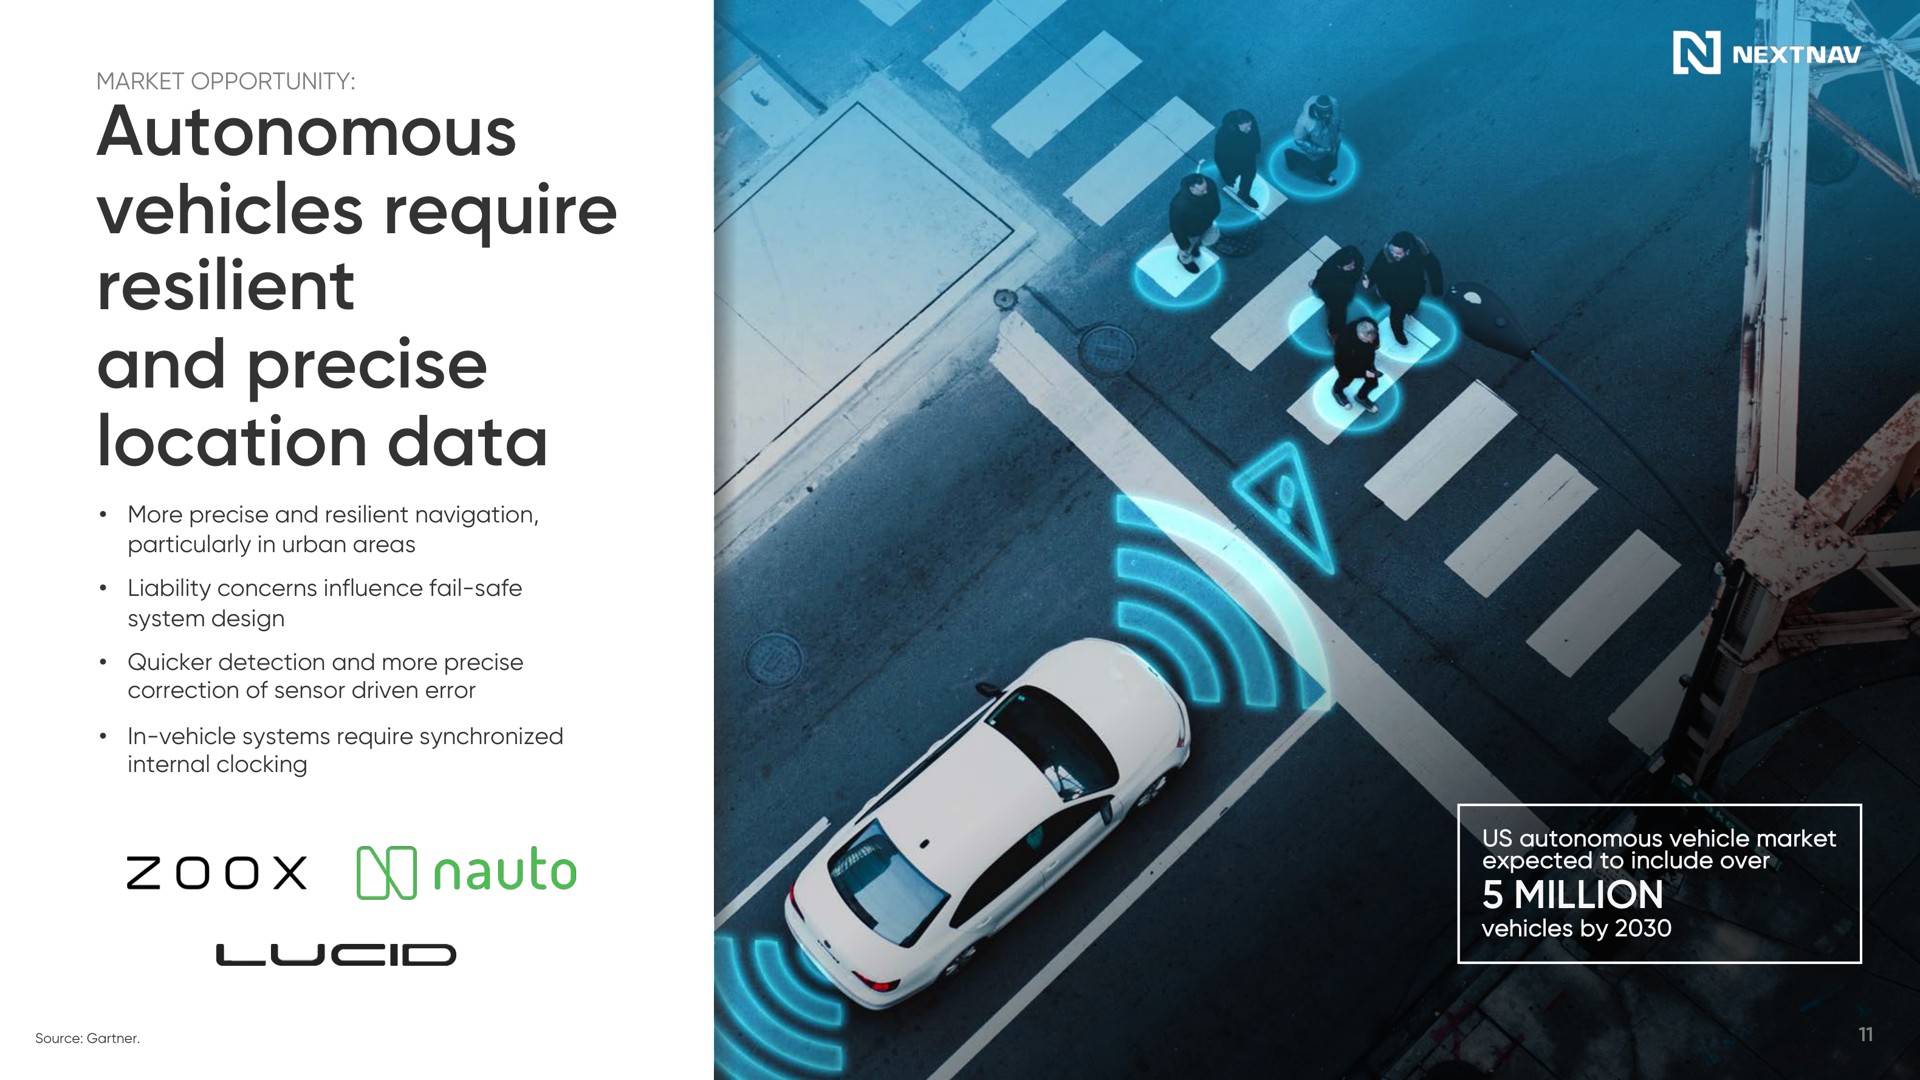 autonomous vehicles require resilient and precise location data bay a | NextNav